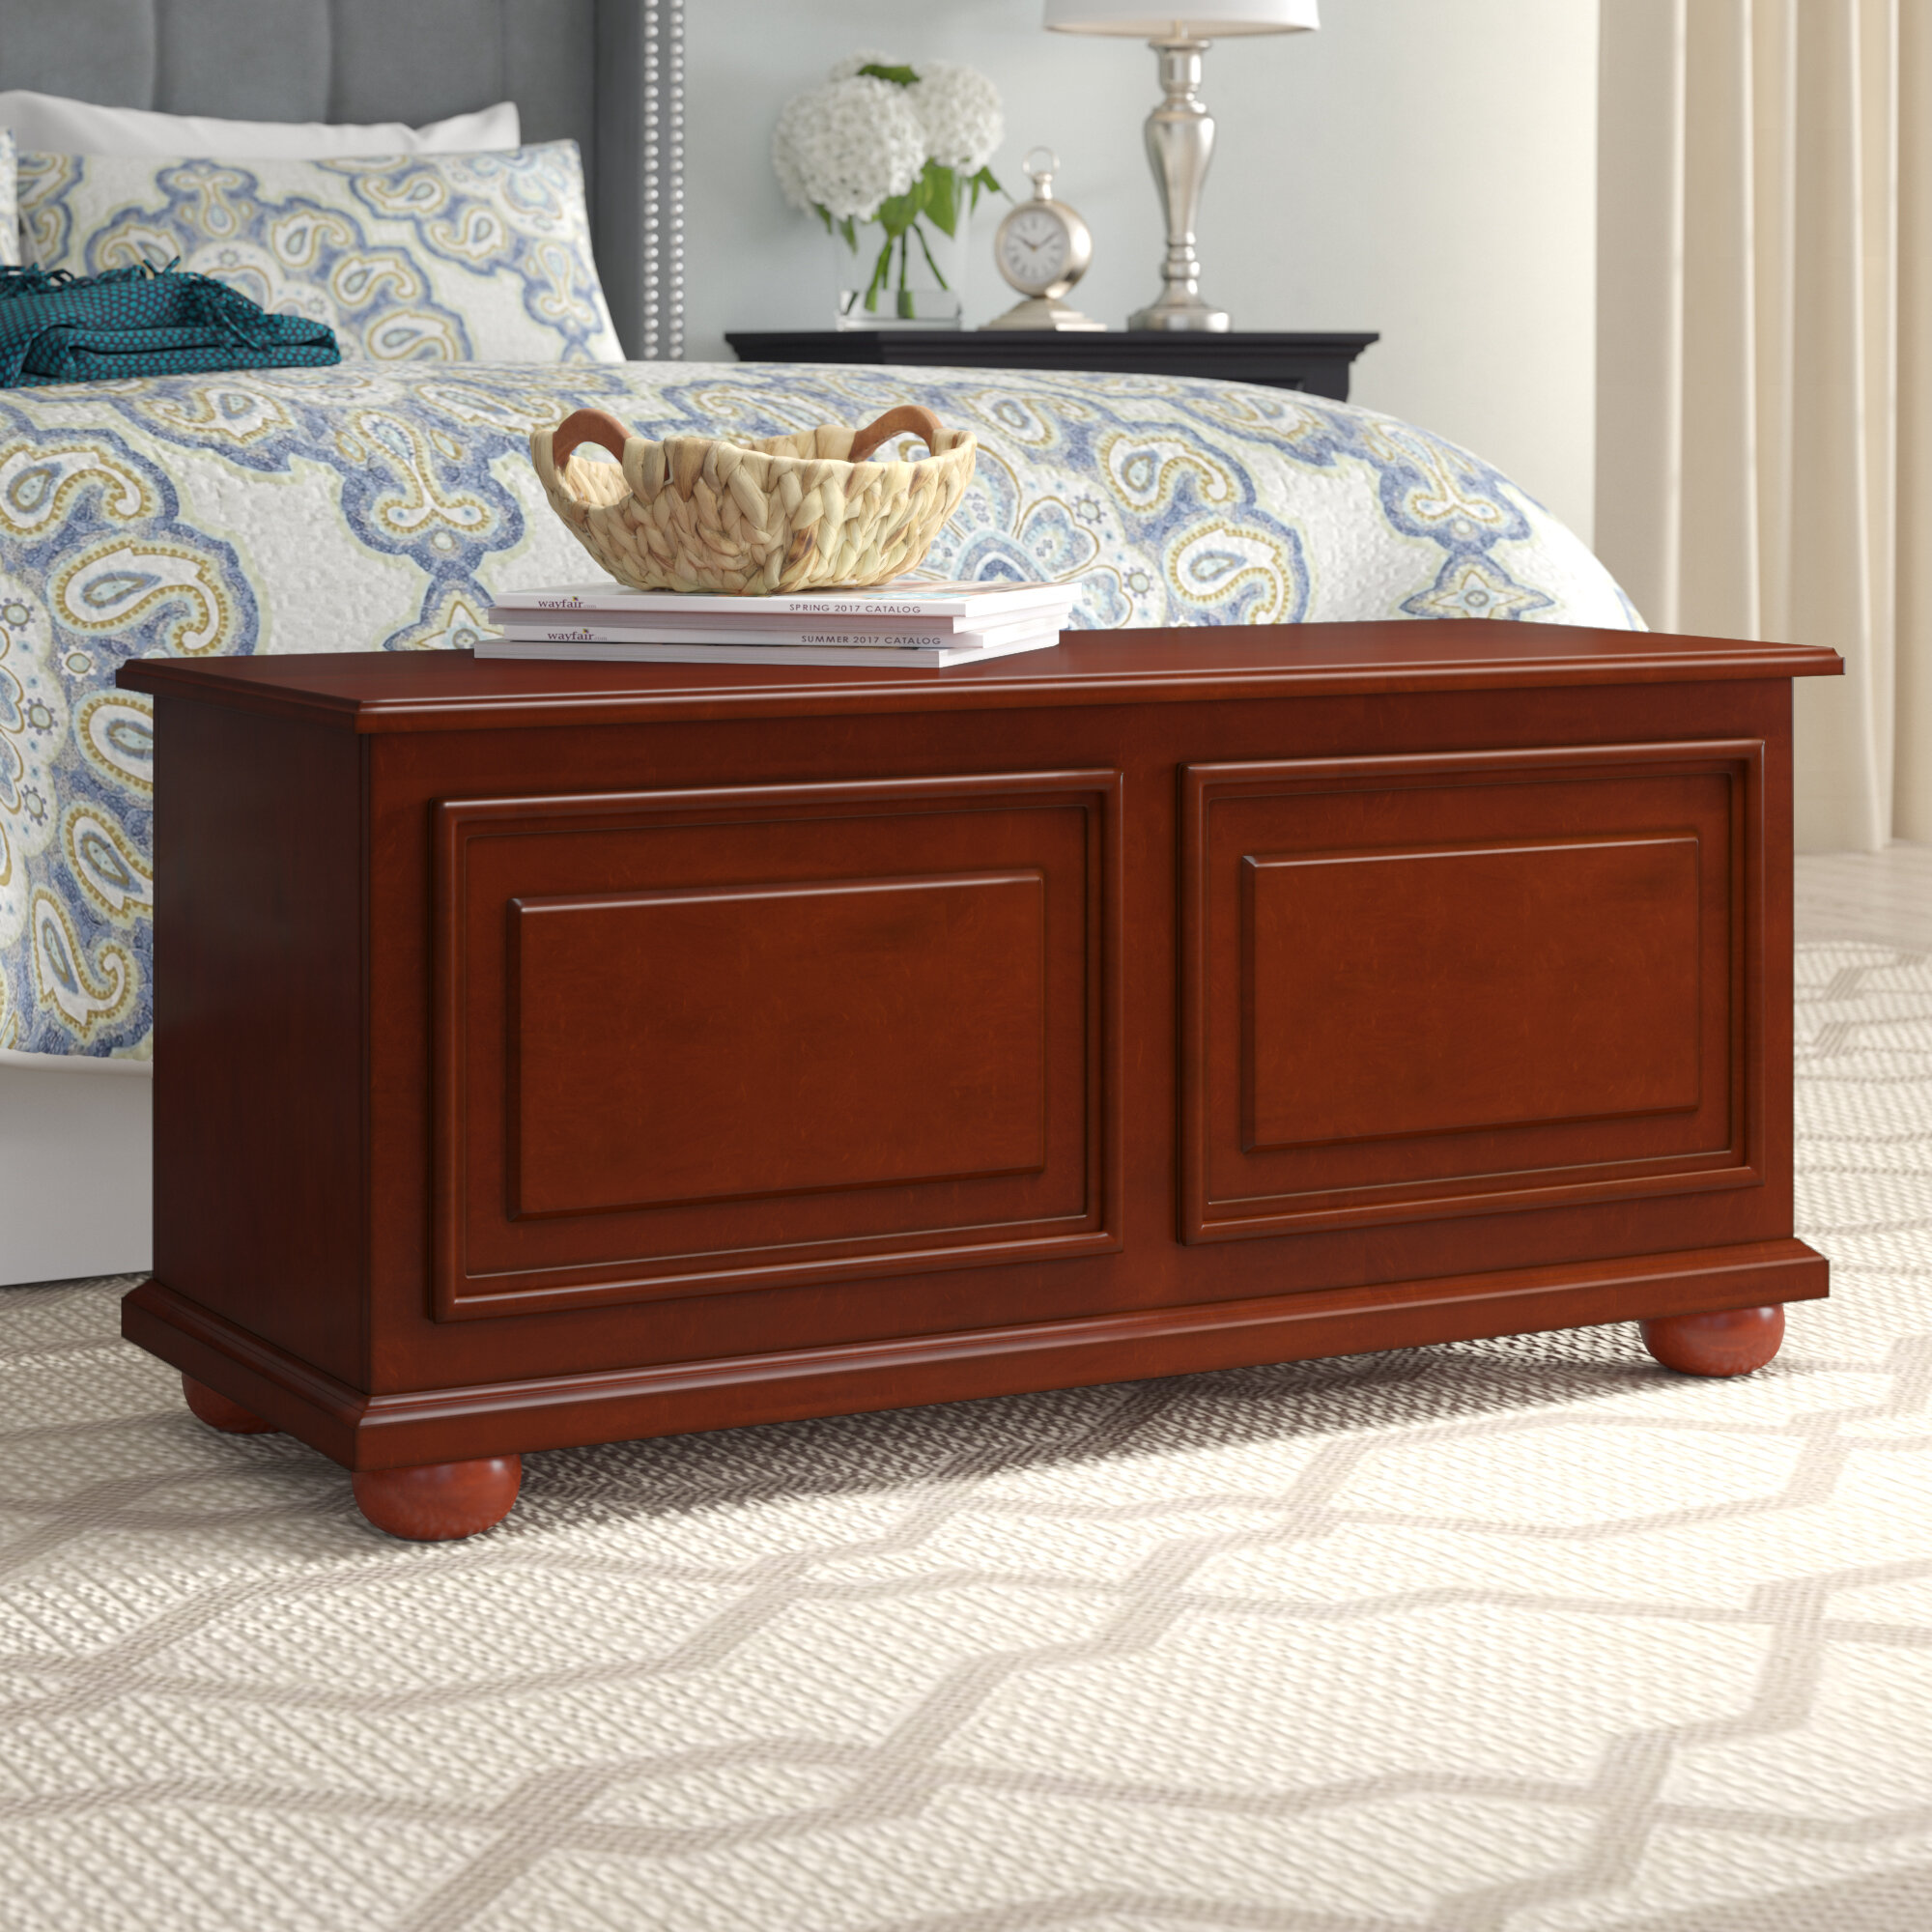 Medium Wooden Storage Chest Living Room Furniture Shoe Blanket Cabinet Chests 